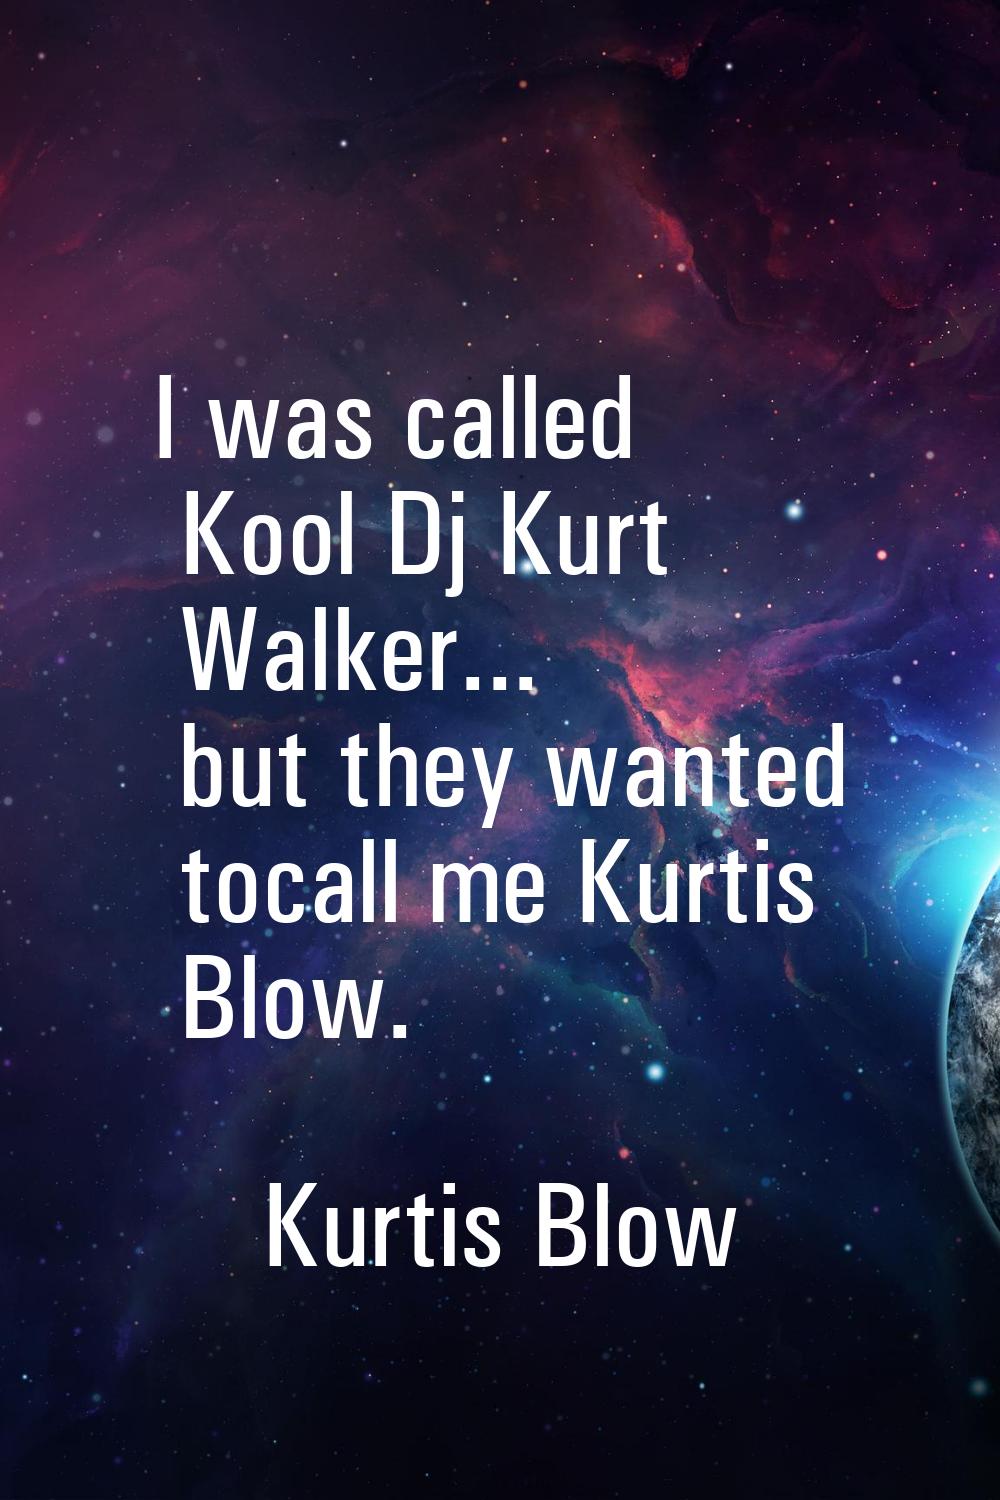 I was called Kool Dj Kurt Walker... but they wanted tocall me Kurtis Blow.